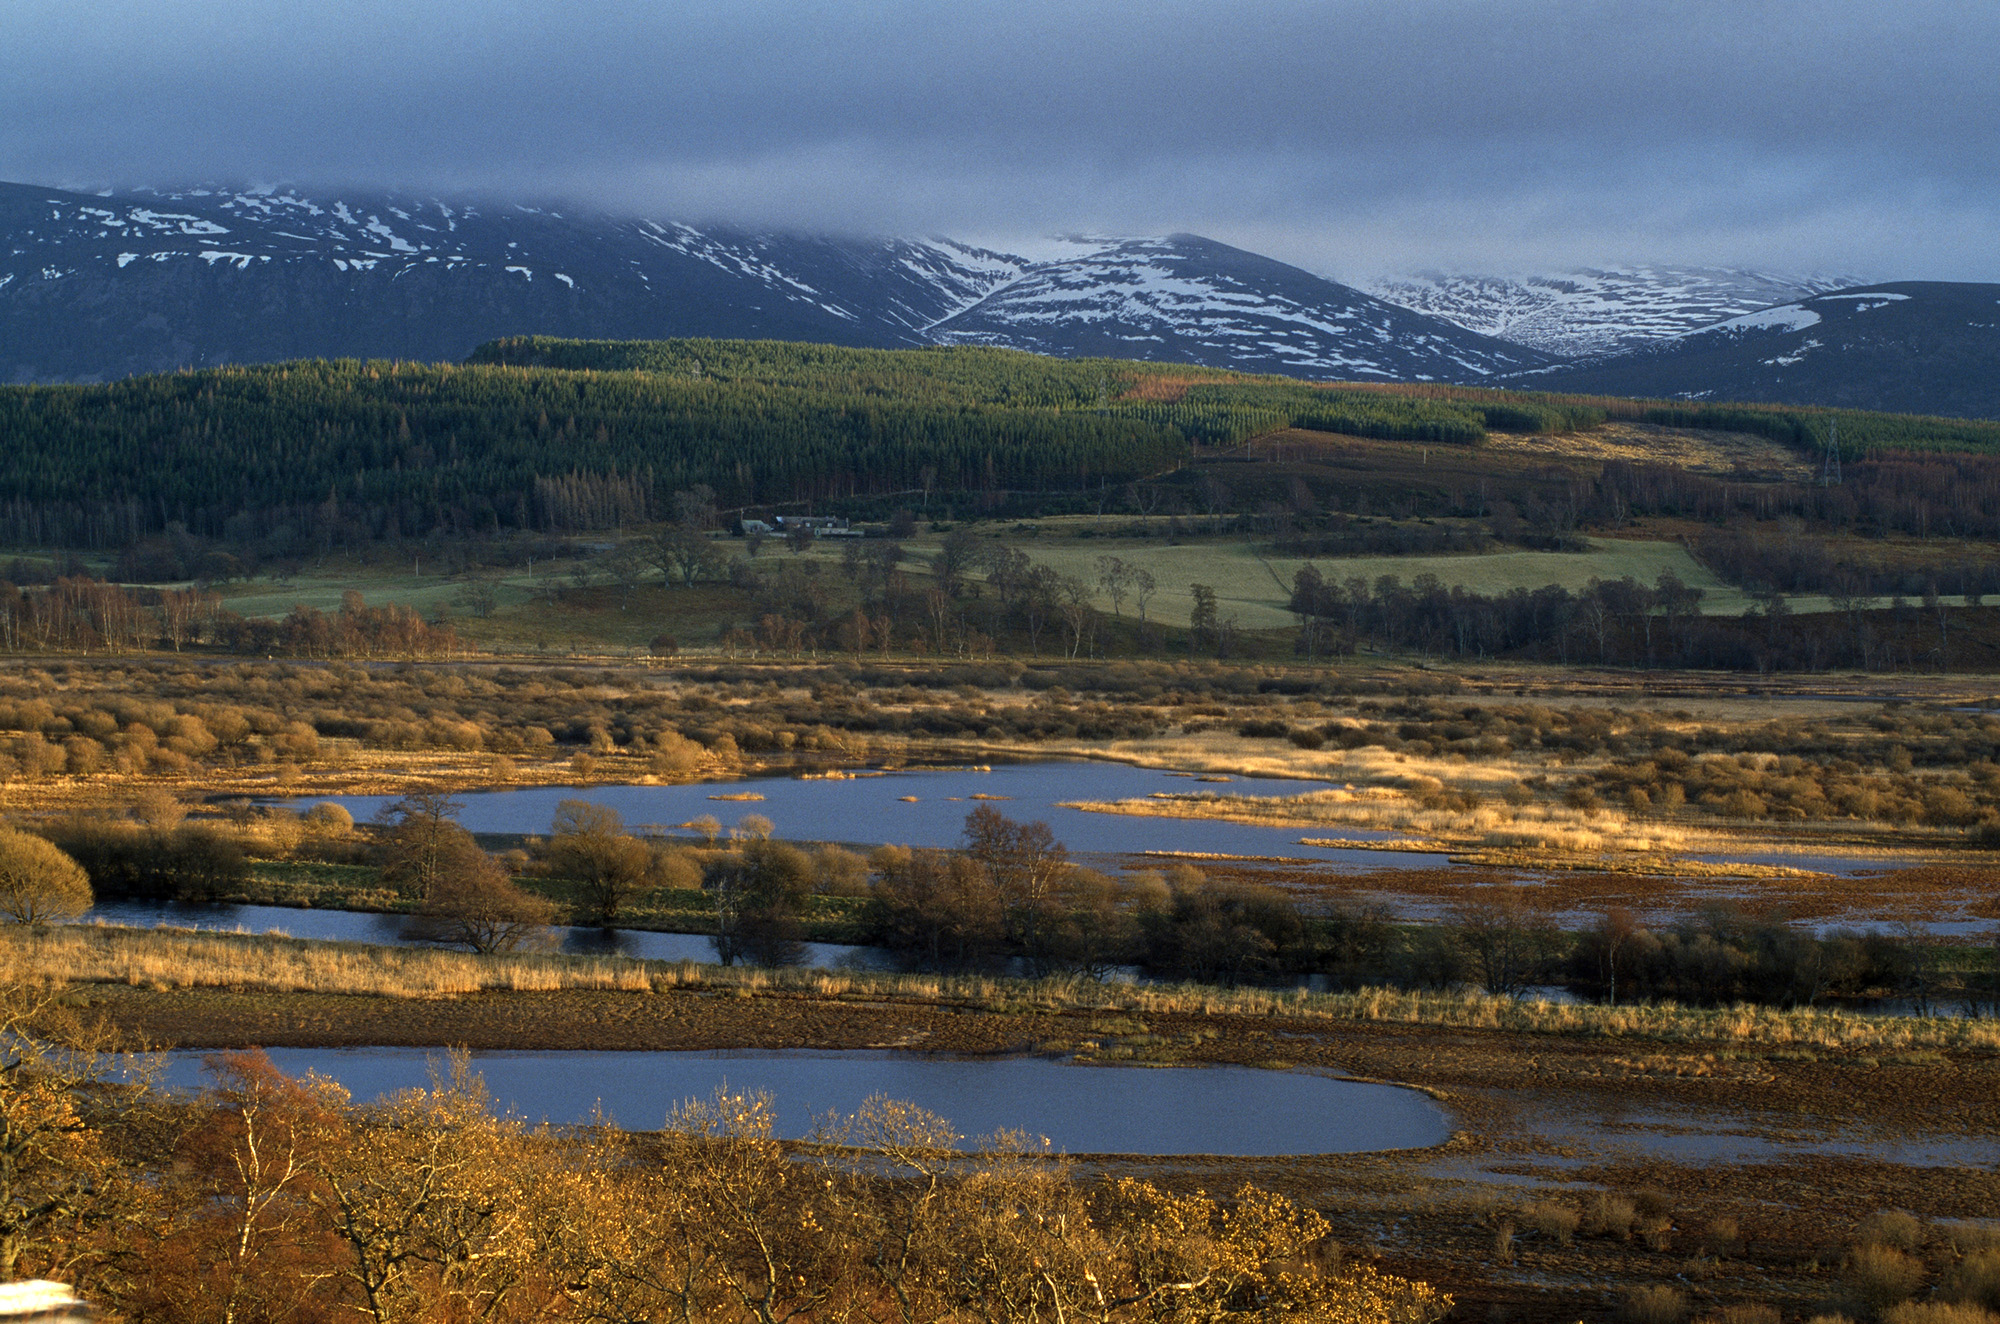 Scotland nature reserves. Insh Marches Шотландия. Шотландия болота Маршес. Болота инш в Шотландии. Пинские болота Шотландия.